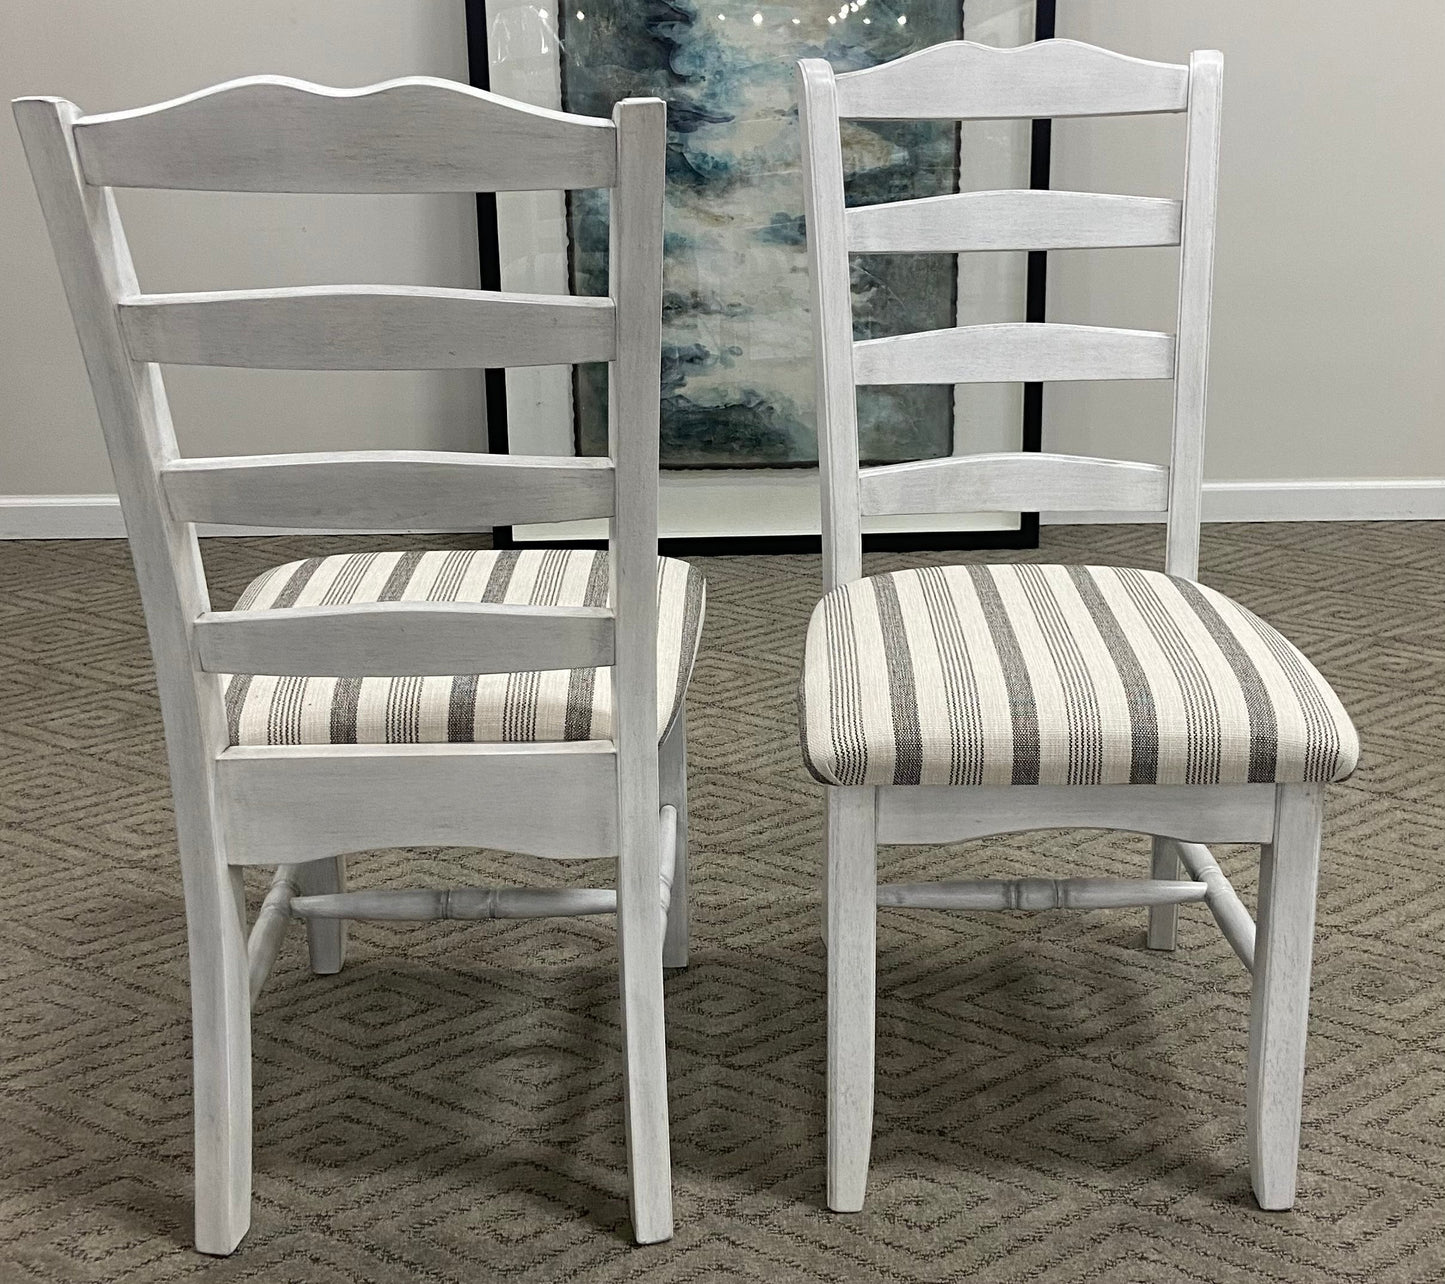 Magnolia Chair (Closeout Fabric)